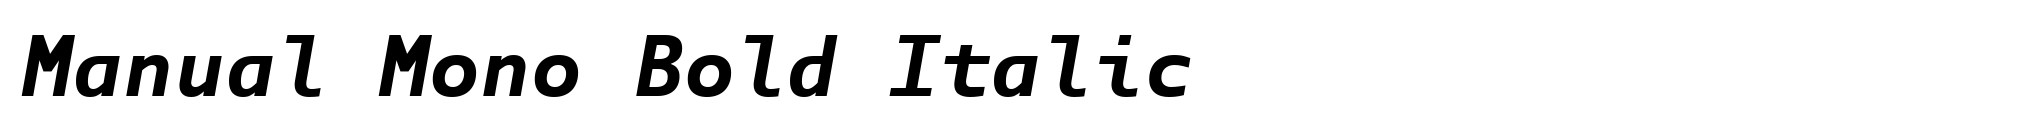 Manual Mono Bold Italic image